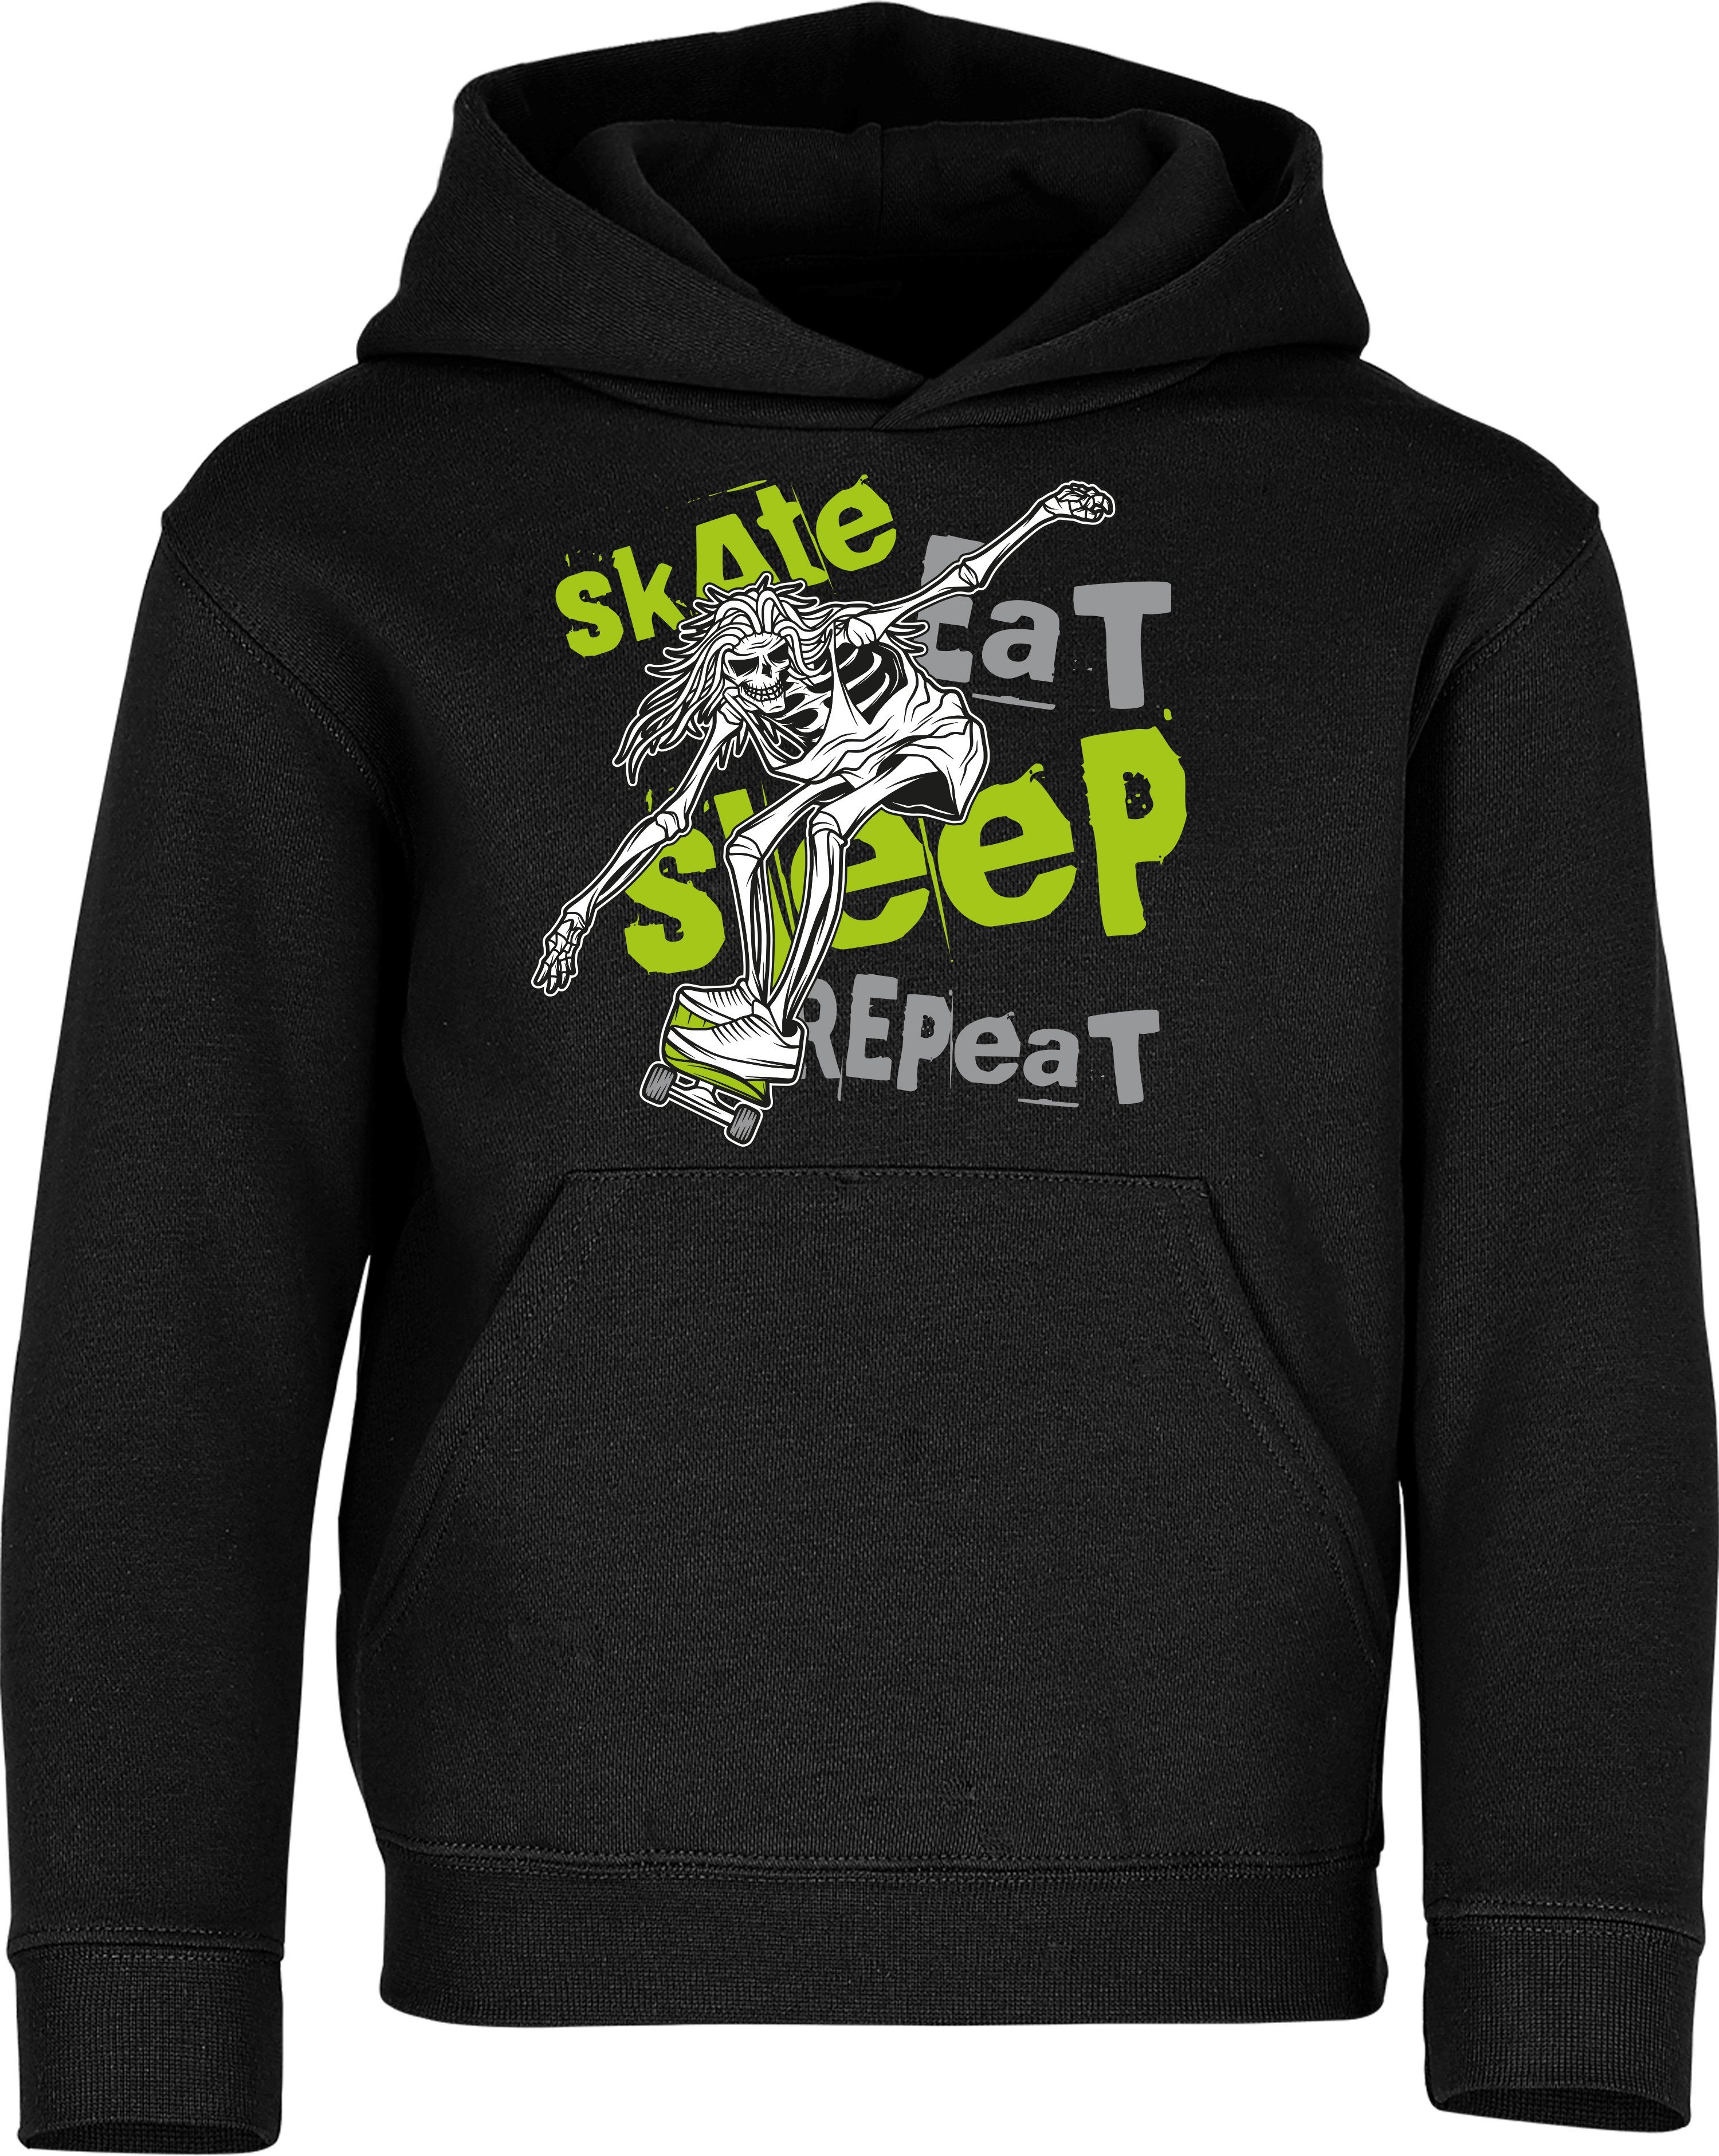 Baddery Kapuzenpullover Kinder Hoodie : Skate Eat Sleep Repeat - Pulli Skateboard Skaten hochwertiger Siebdruck Schwarz